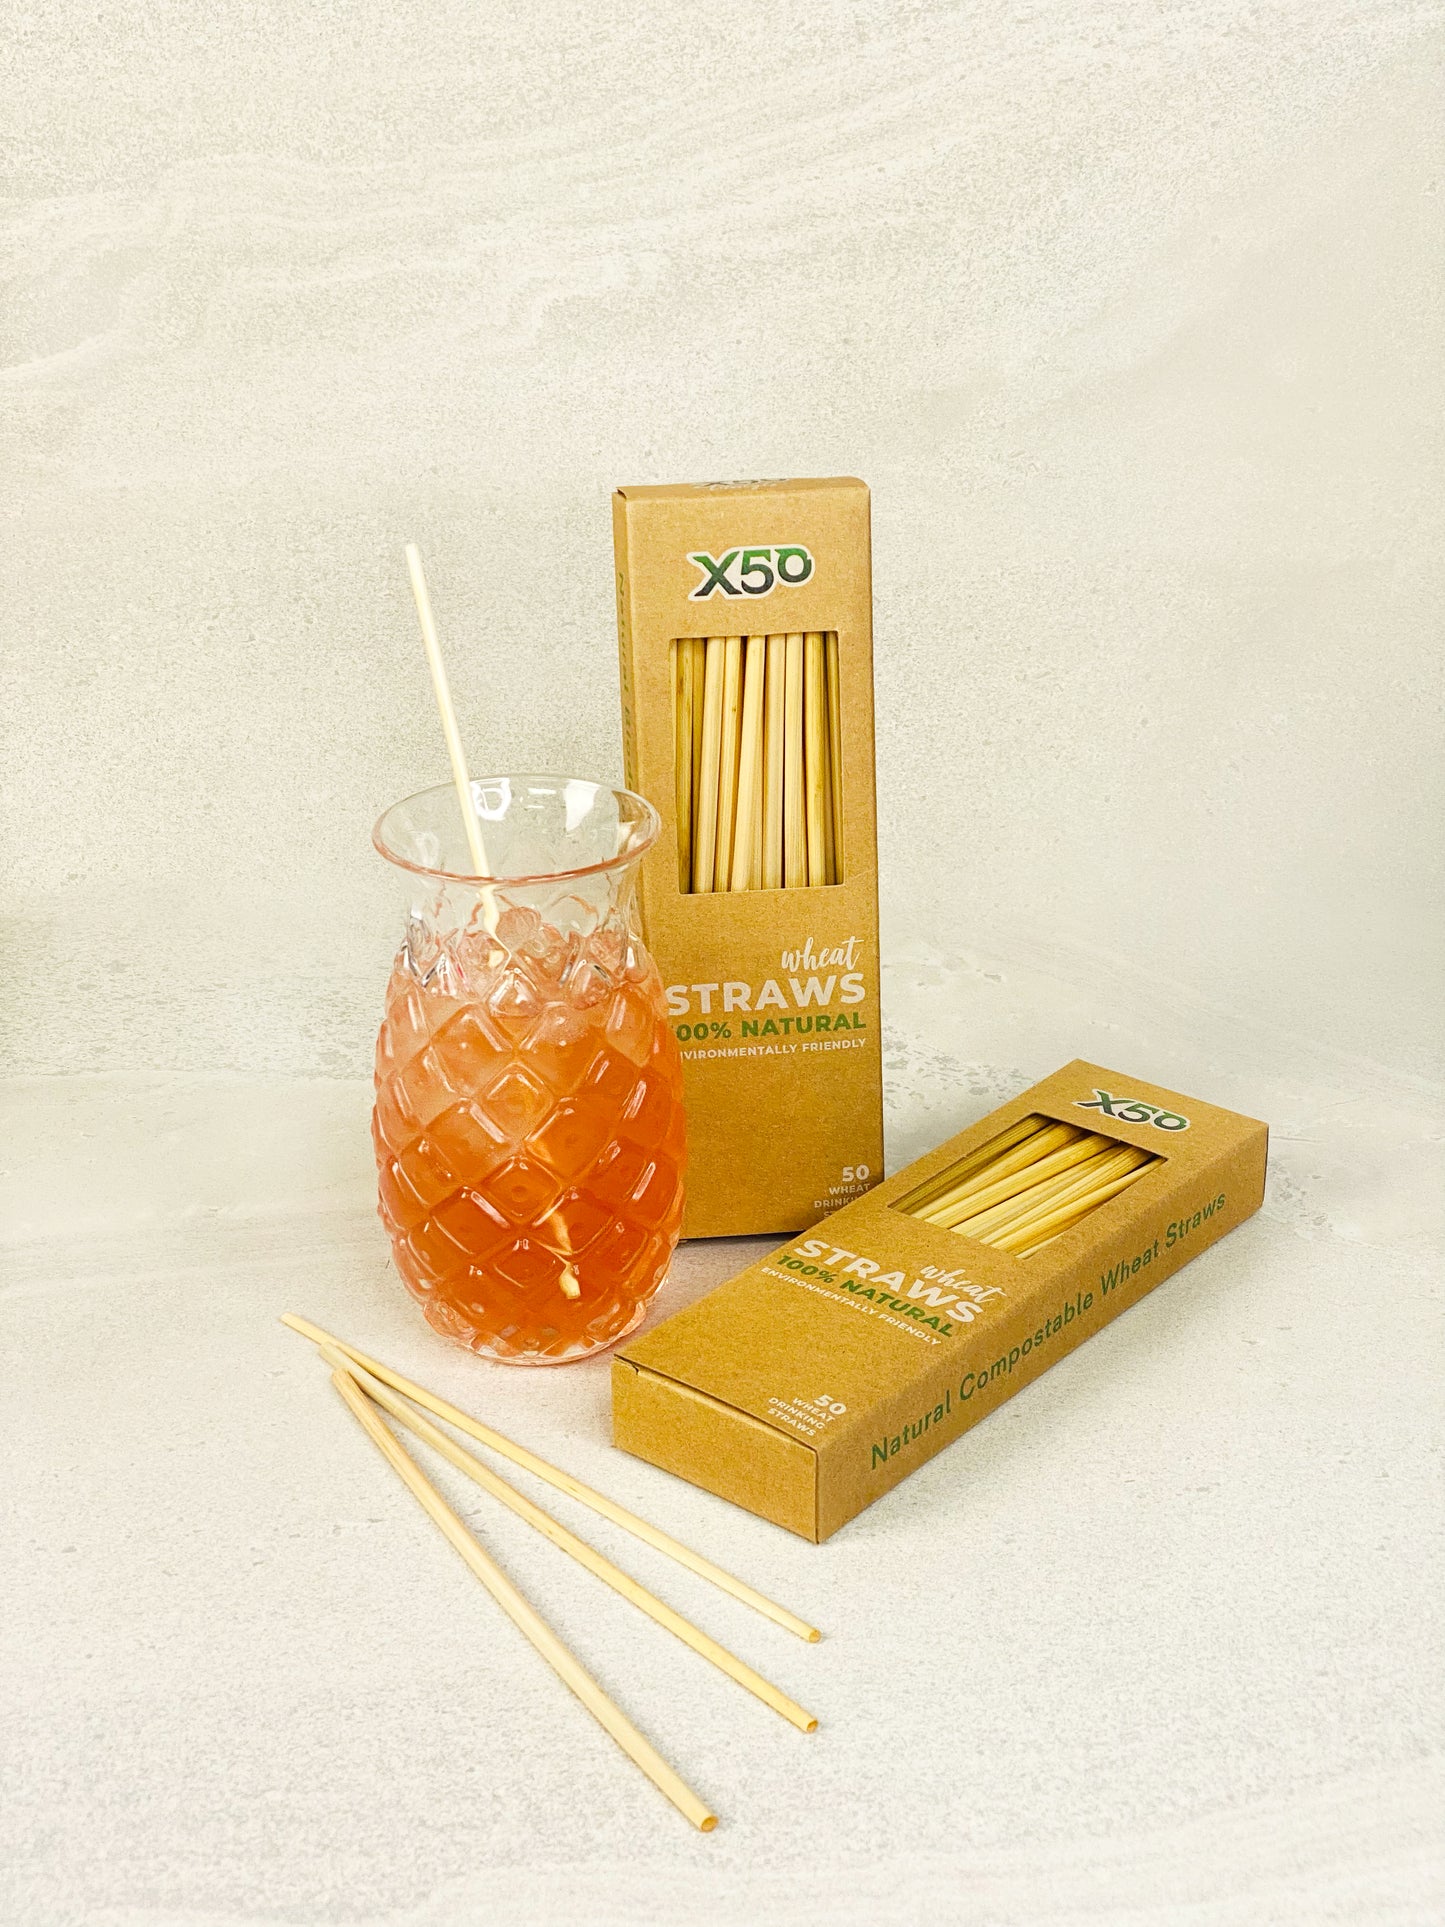 X50 100% Natural Wheat Straws. Non-Toxic, Biodegradable & Eco-Friendly.